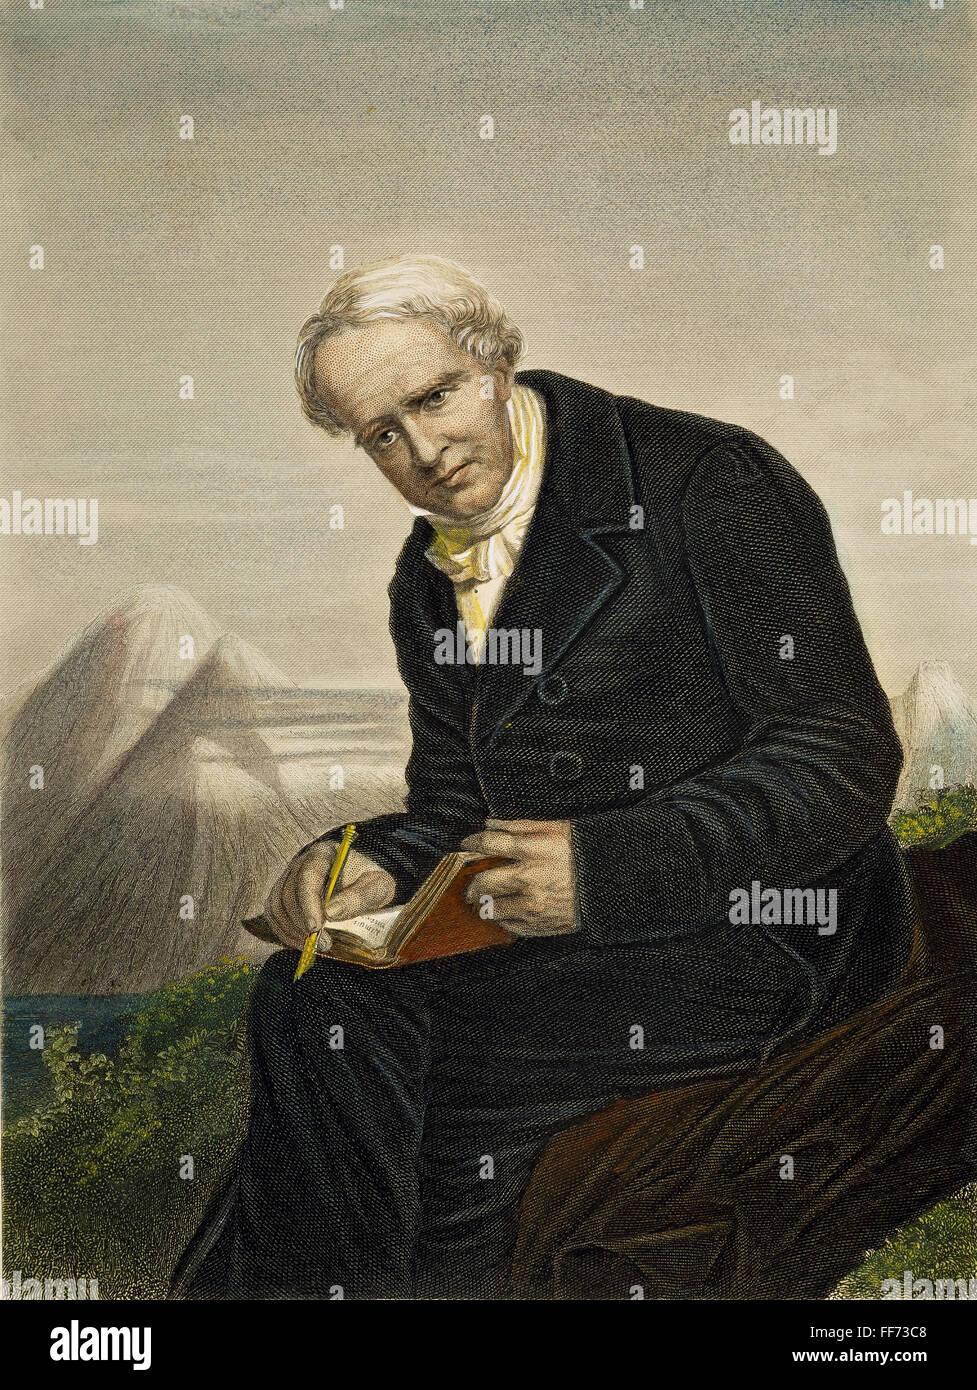 ALEXANDER von HUMBOLDT /n(1769-1859). German naturalist, traveler, and statesman. Engraving, 19th century. Stock Photo